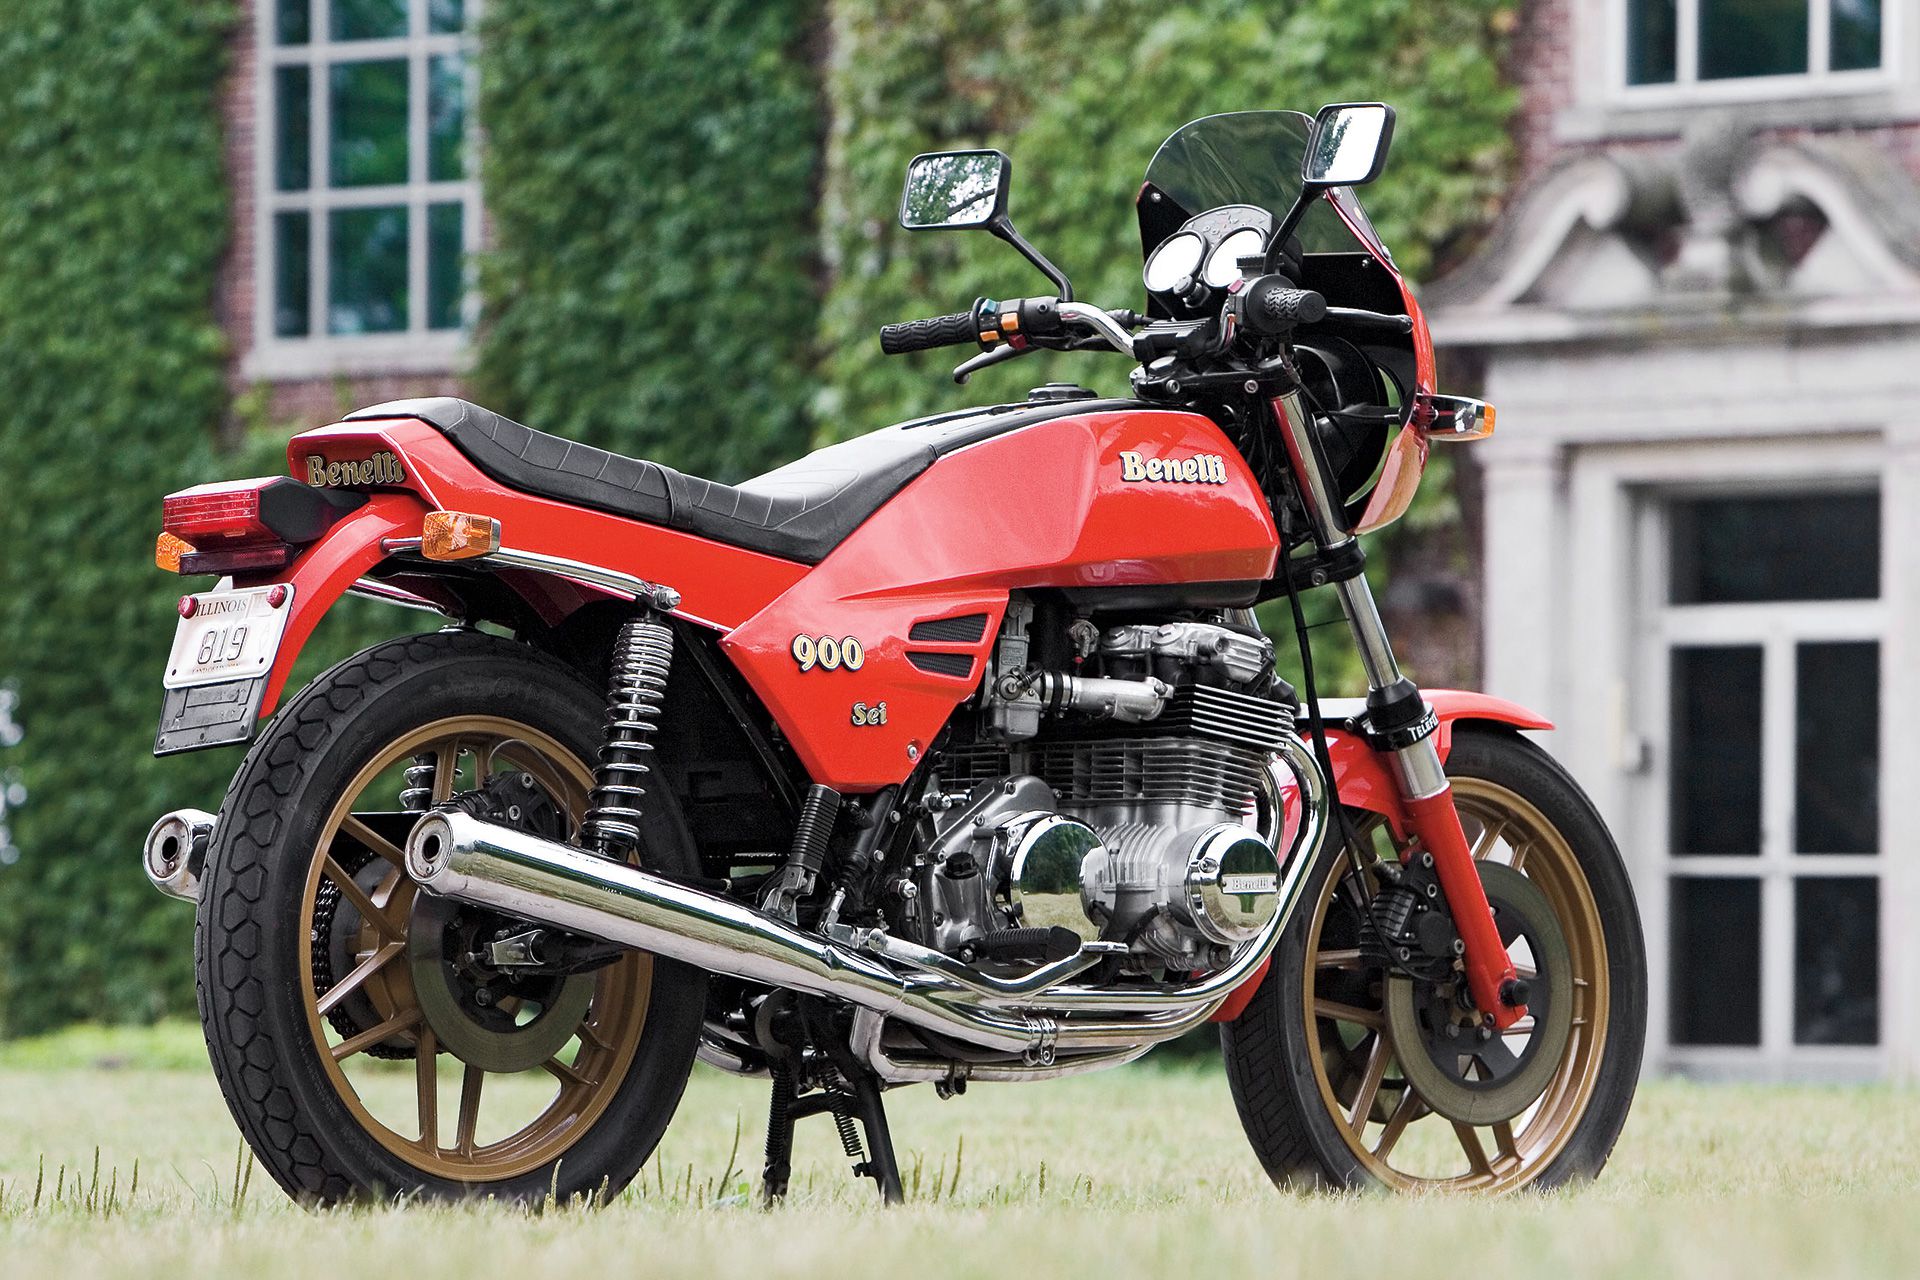 Honda CBX, KZ1300, Benelli 900 Sei, Six-Cylinder Classics | Cycle World